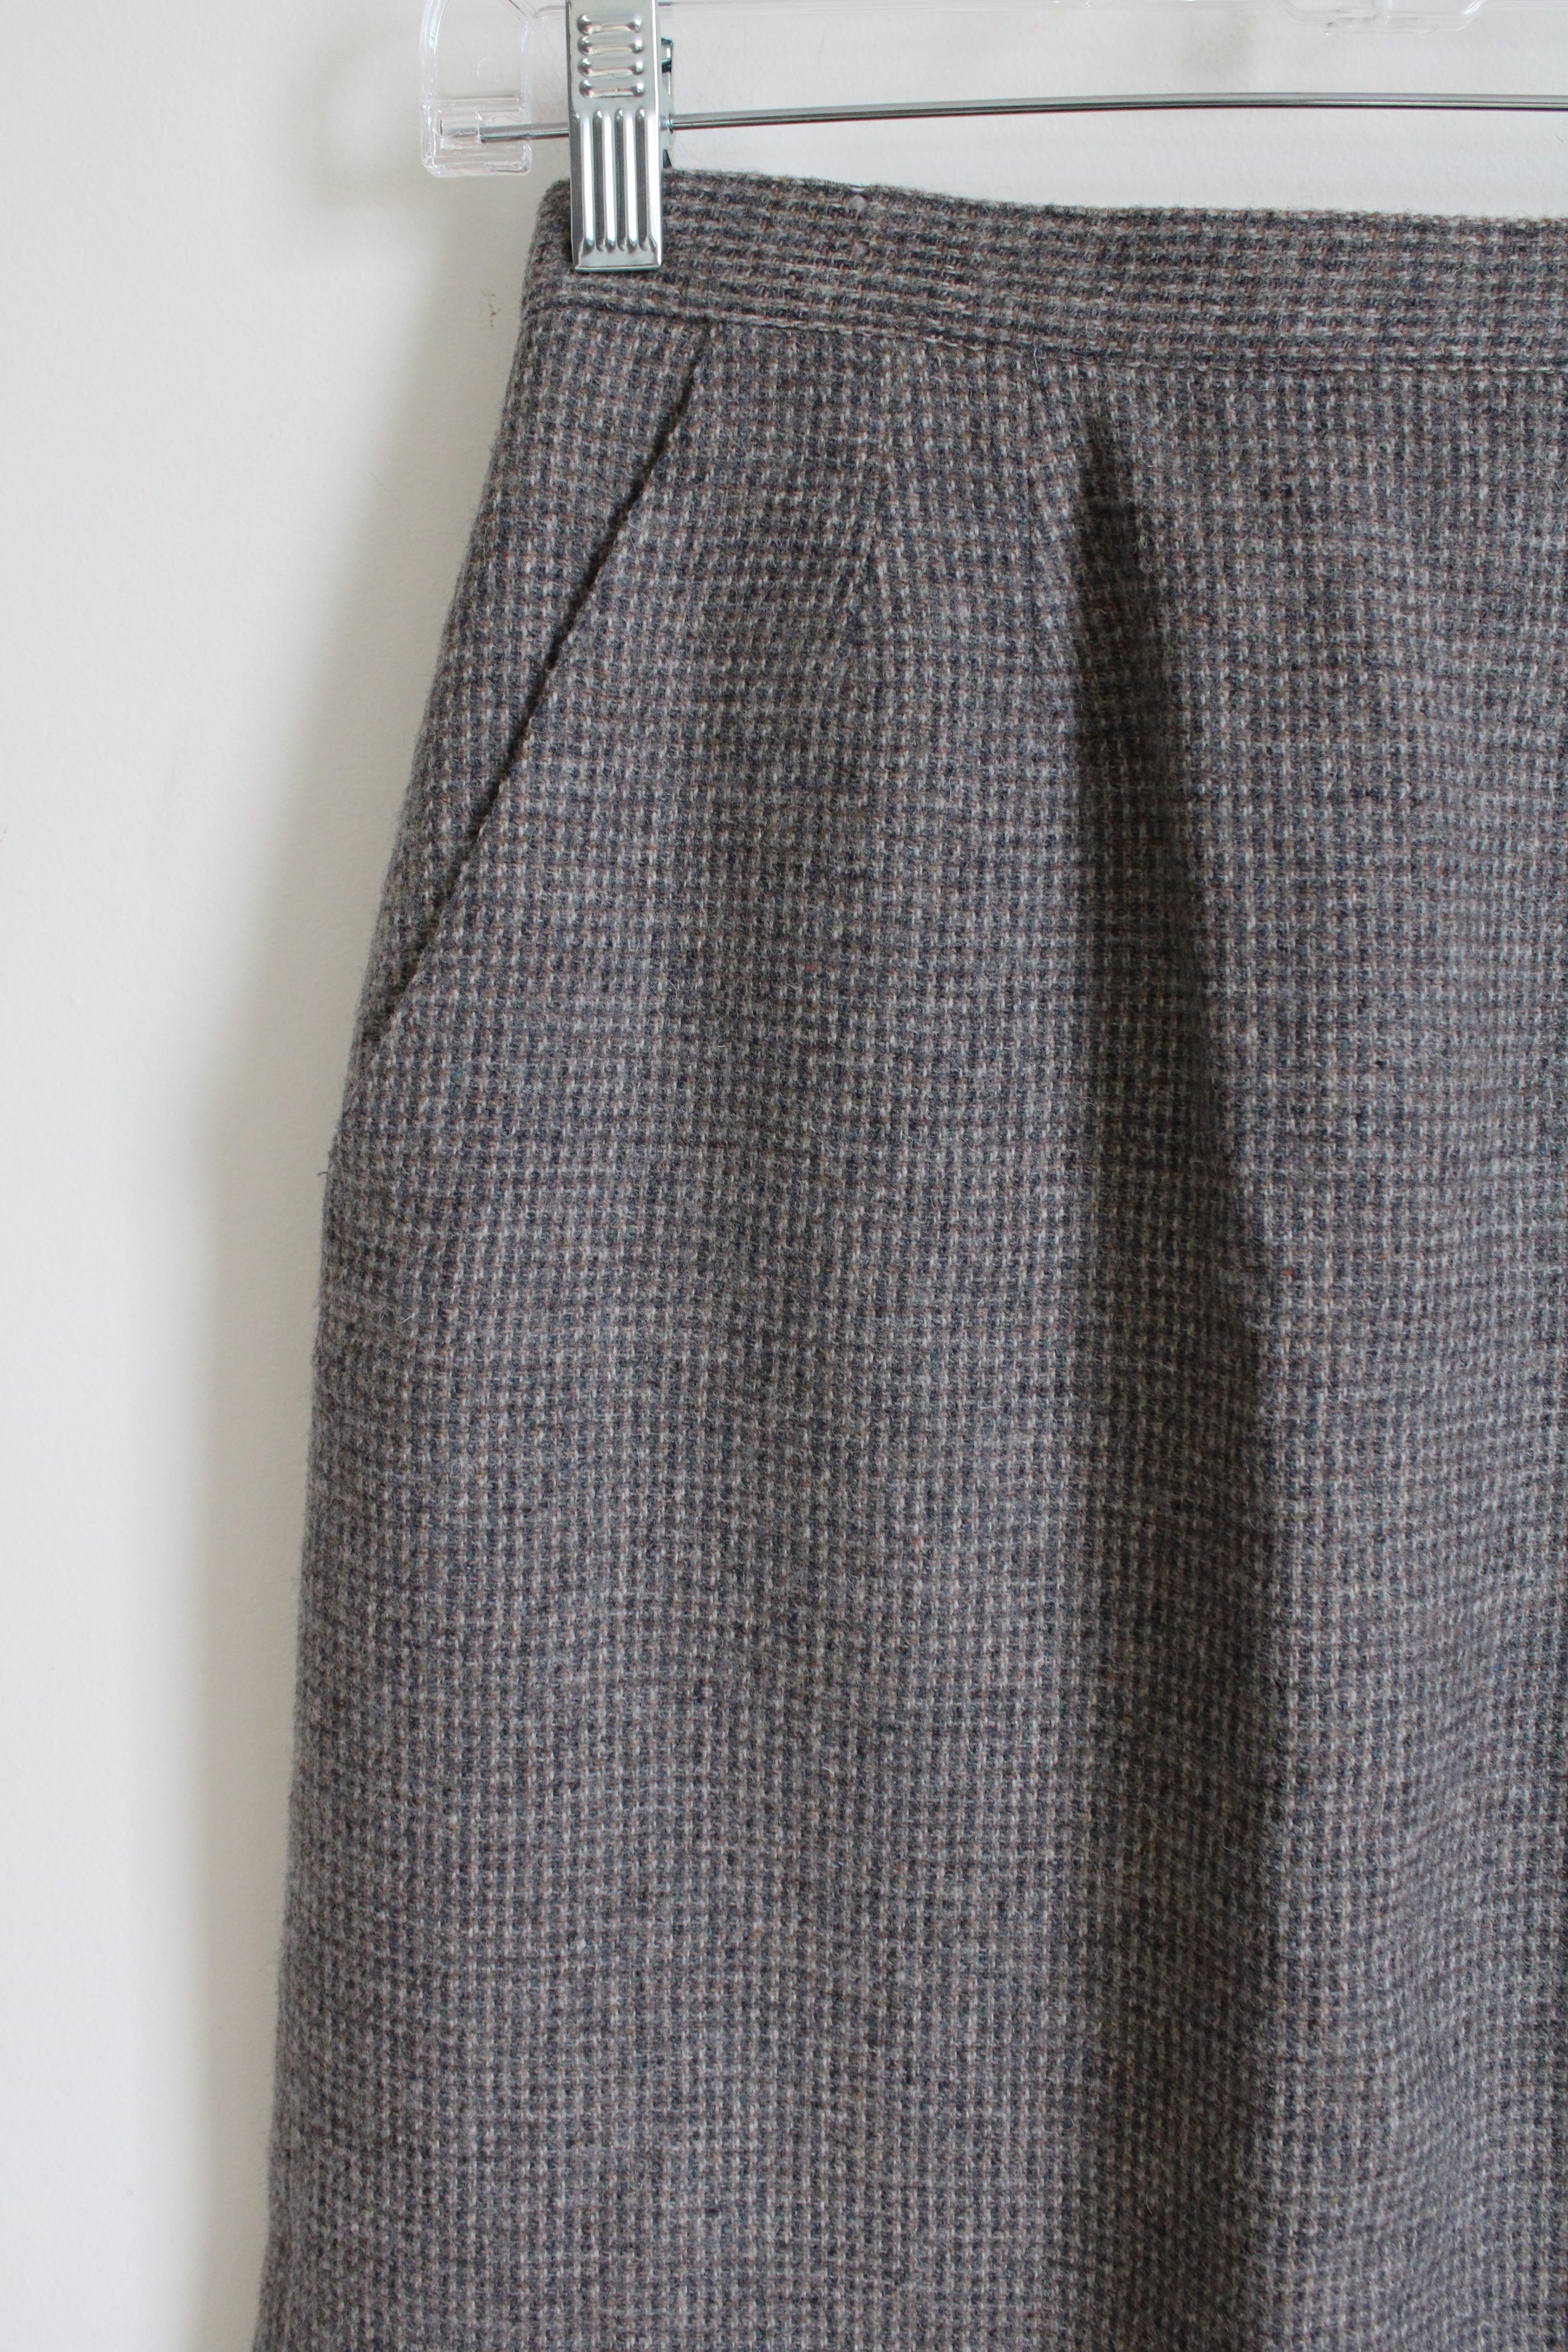 Bretton Place Gray Plaid Wool Skirt | 8 Petite